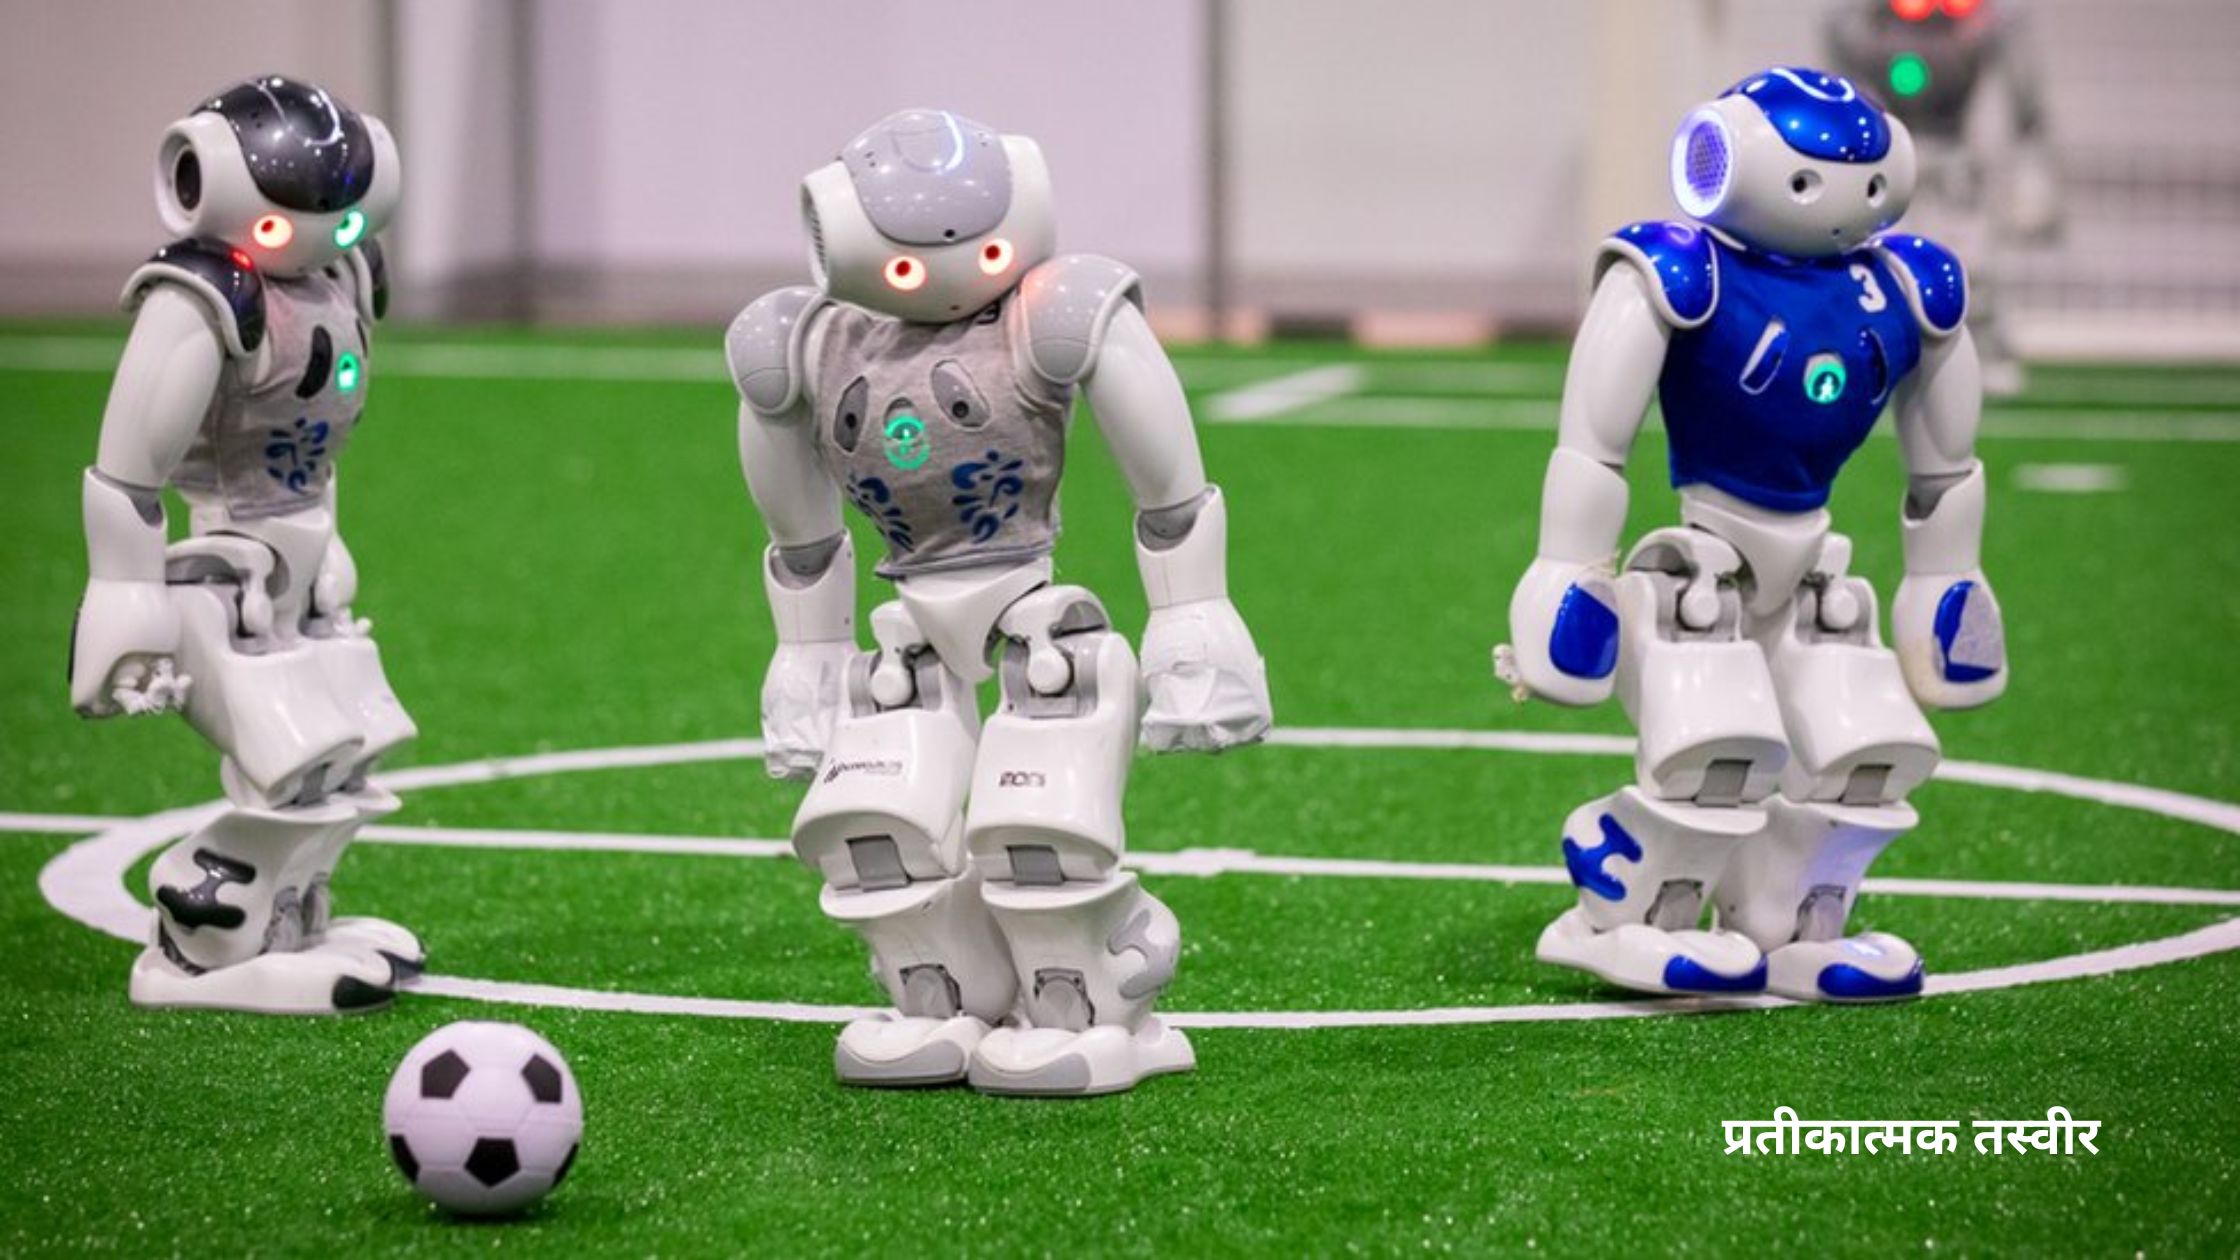 School Children Of Bihar Have Made A Robot Playing Football